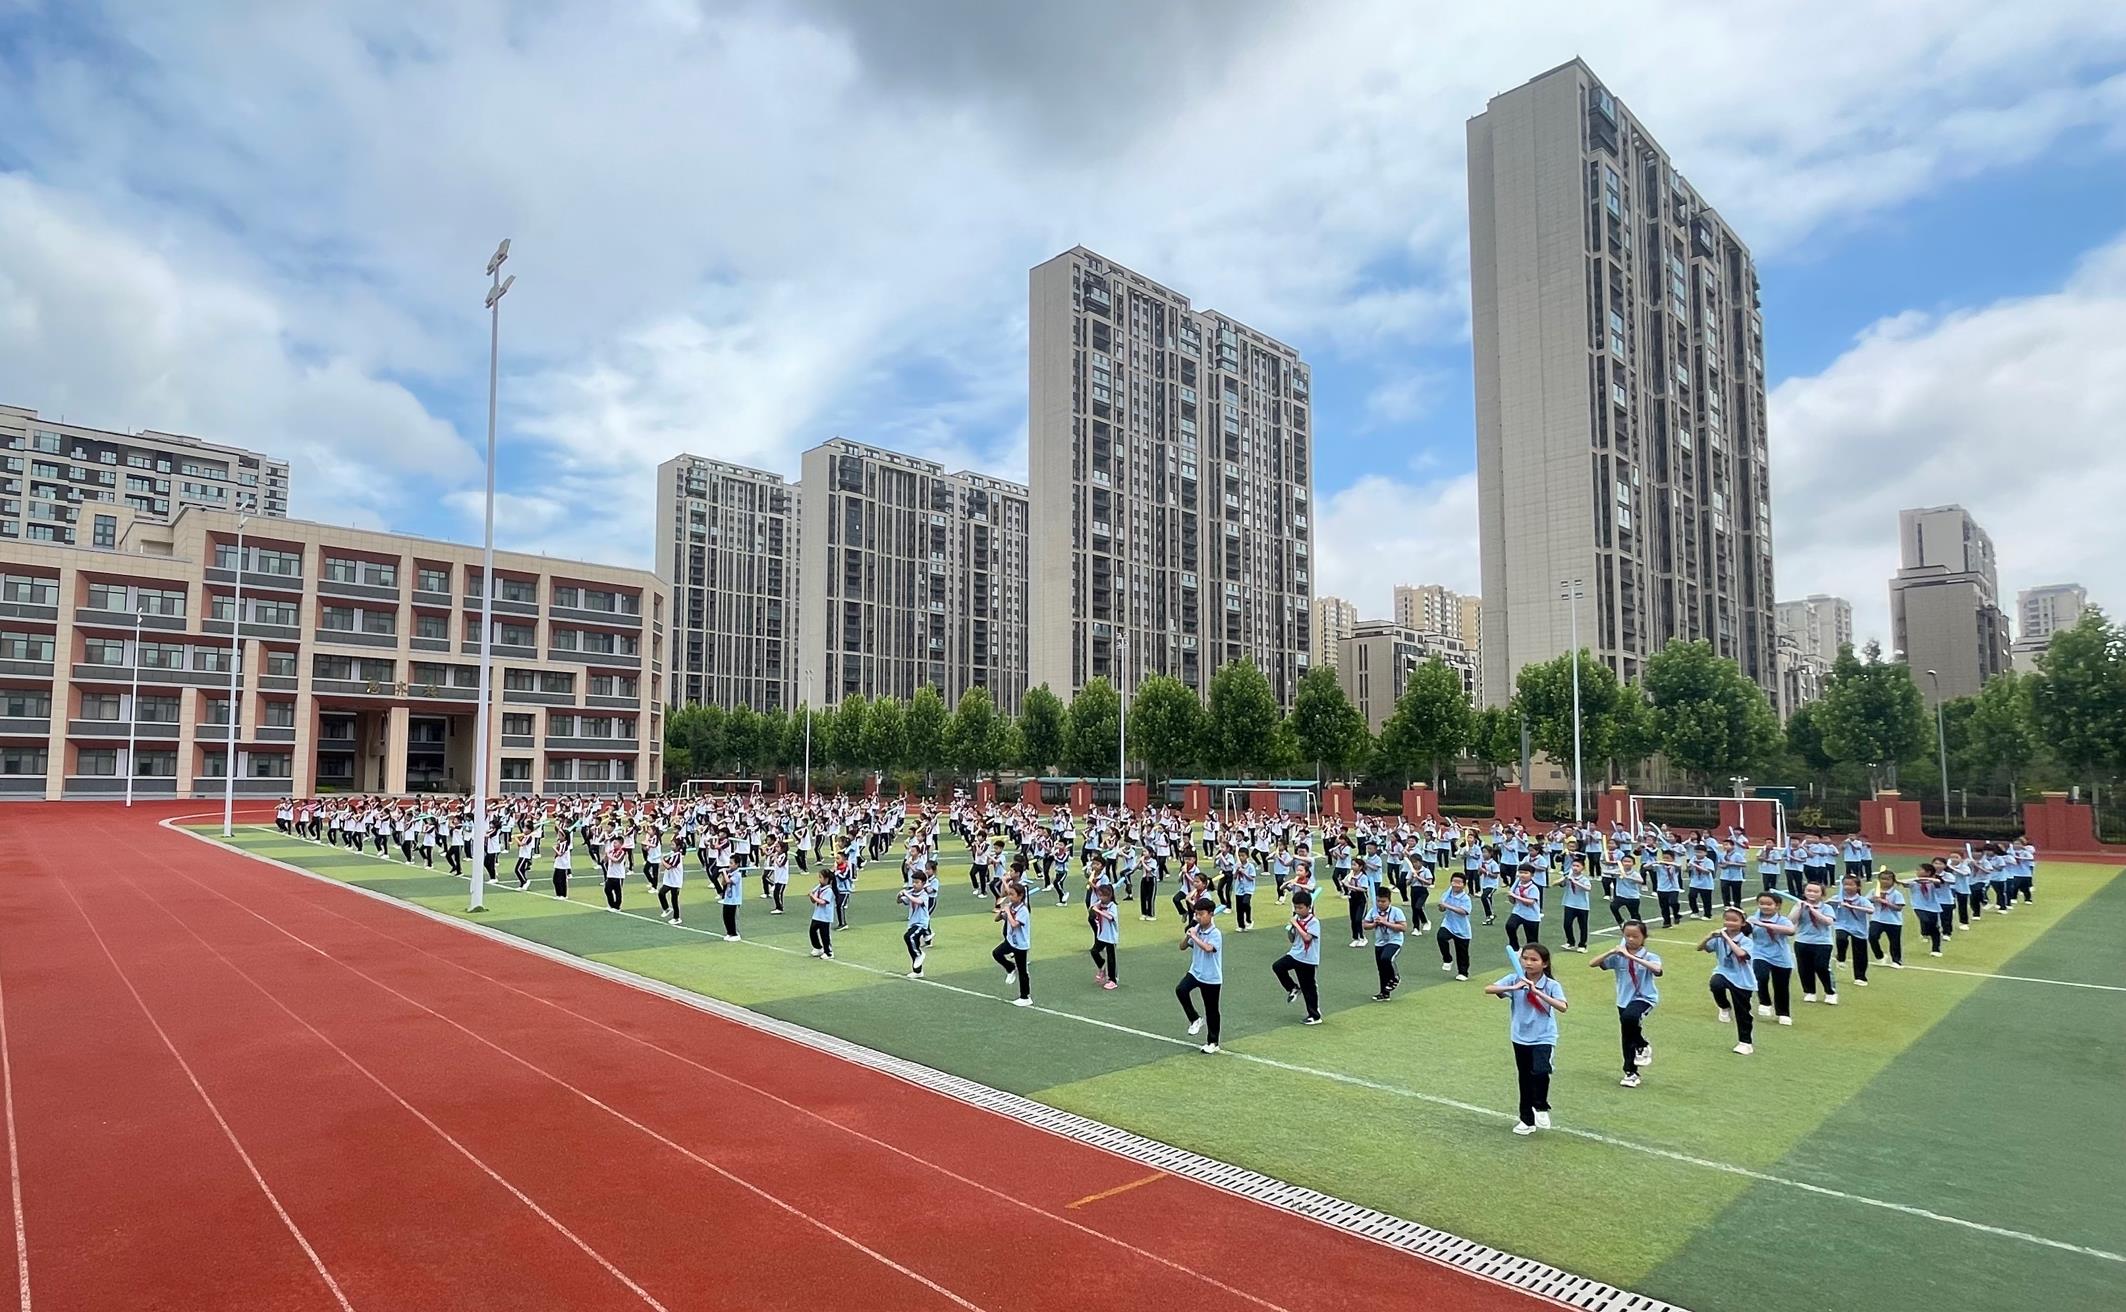 SCODA primary school promotes cricket in China